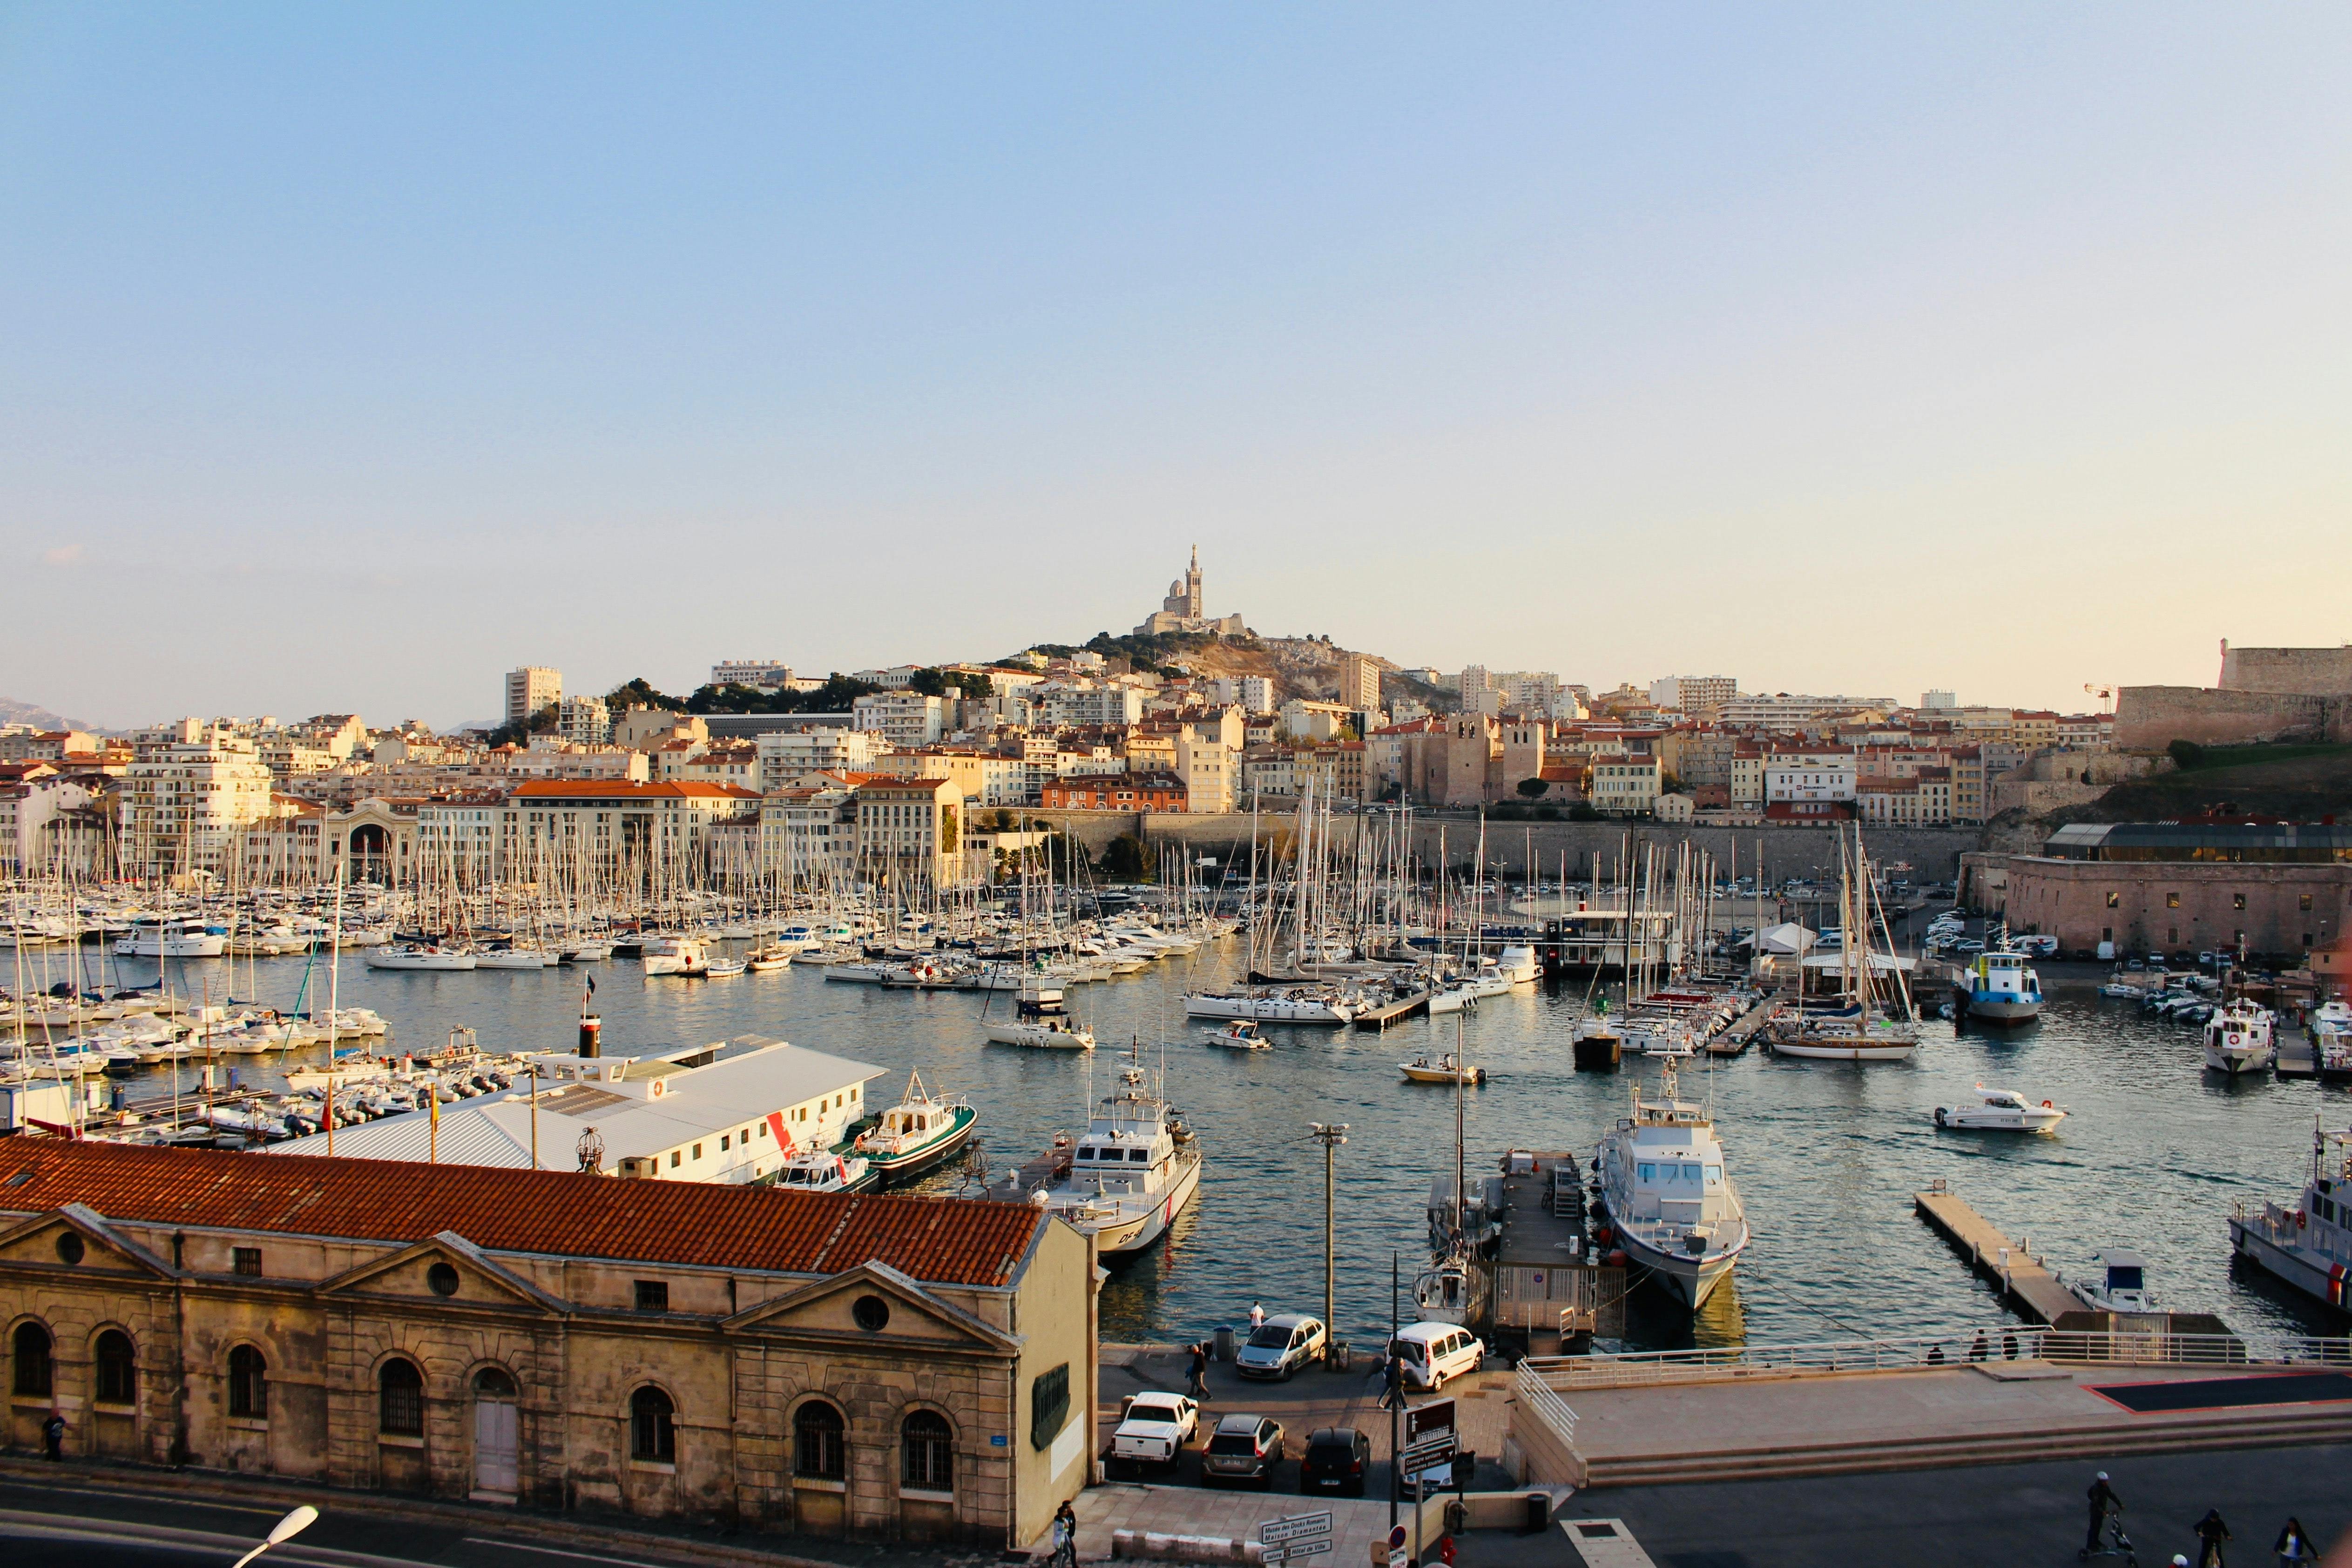 Vieux Port Neighborhood of Marseille